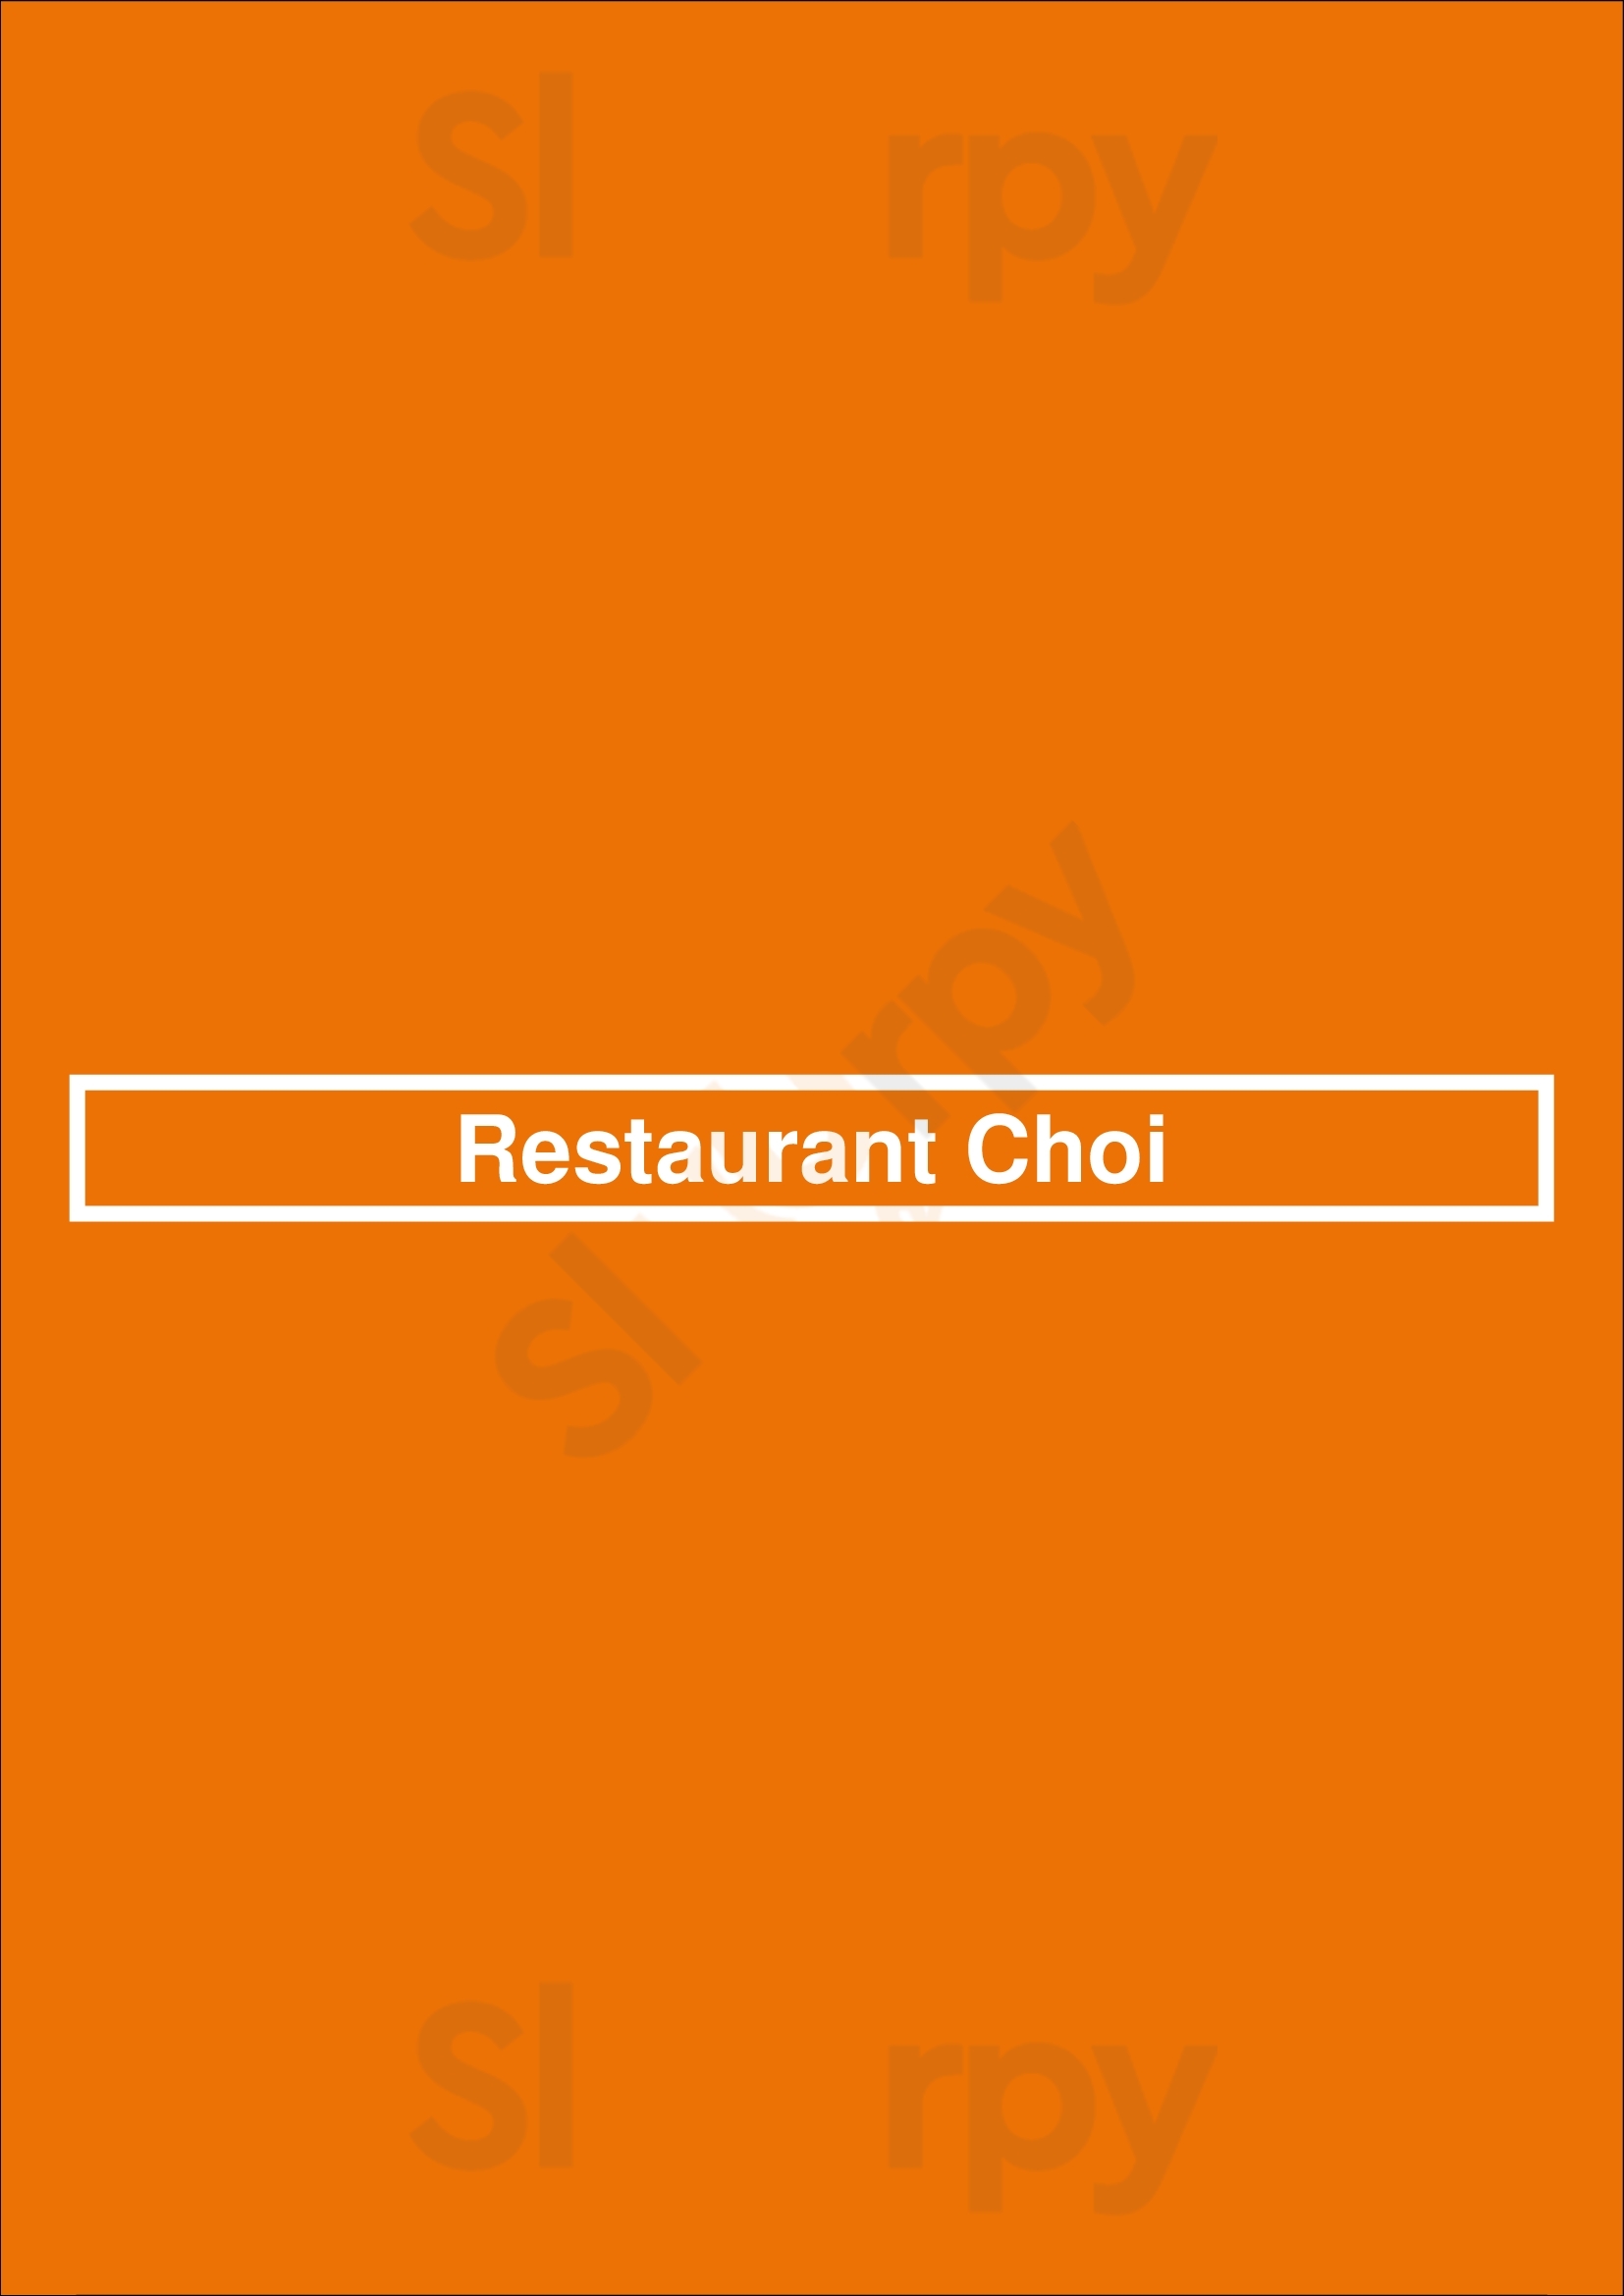 Restaurant Choi Berlin Menu - 1